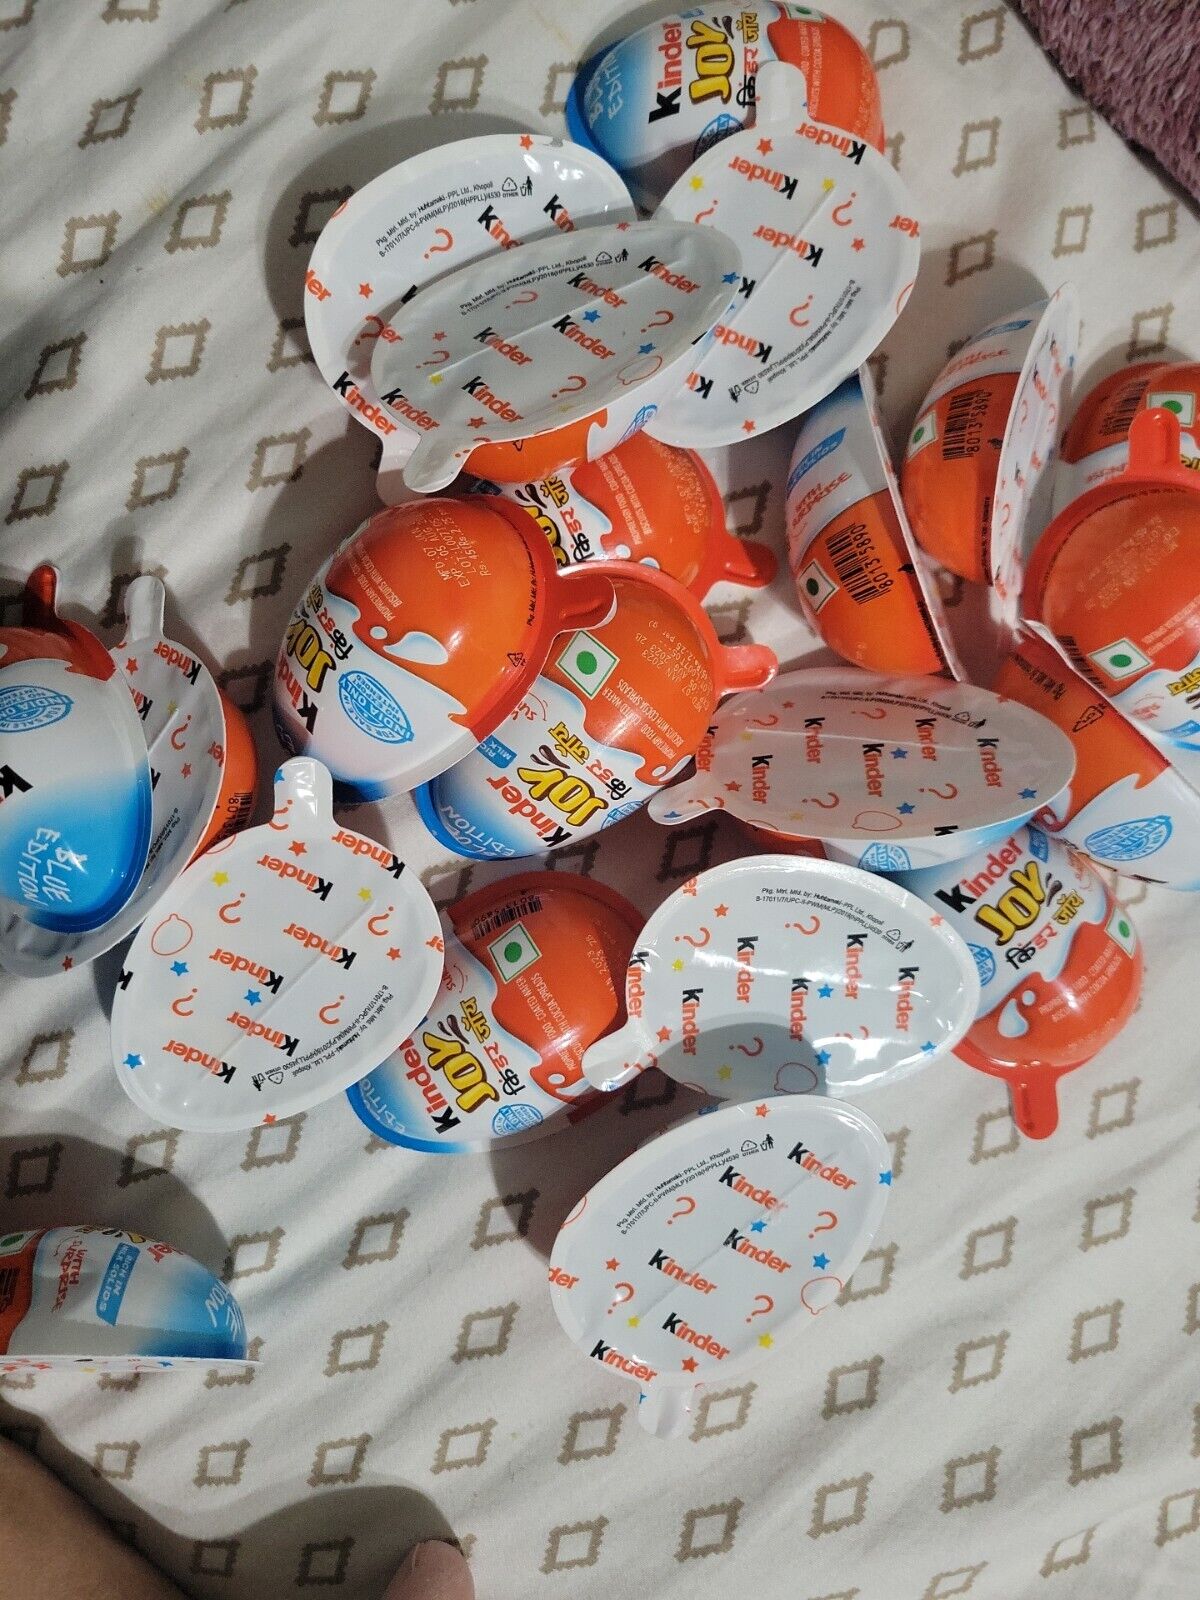 Kinder Joy Toy Halves 60 + 5 FREE unopened Suprise Toys only NO CHOCOLATE